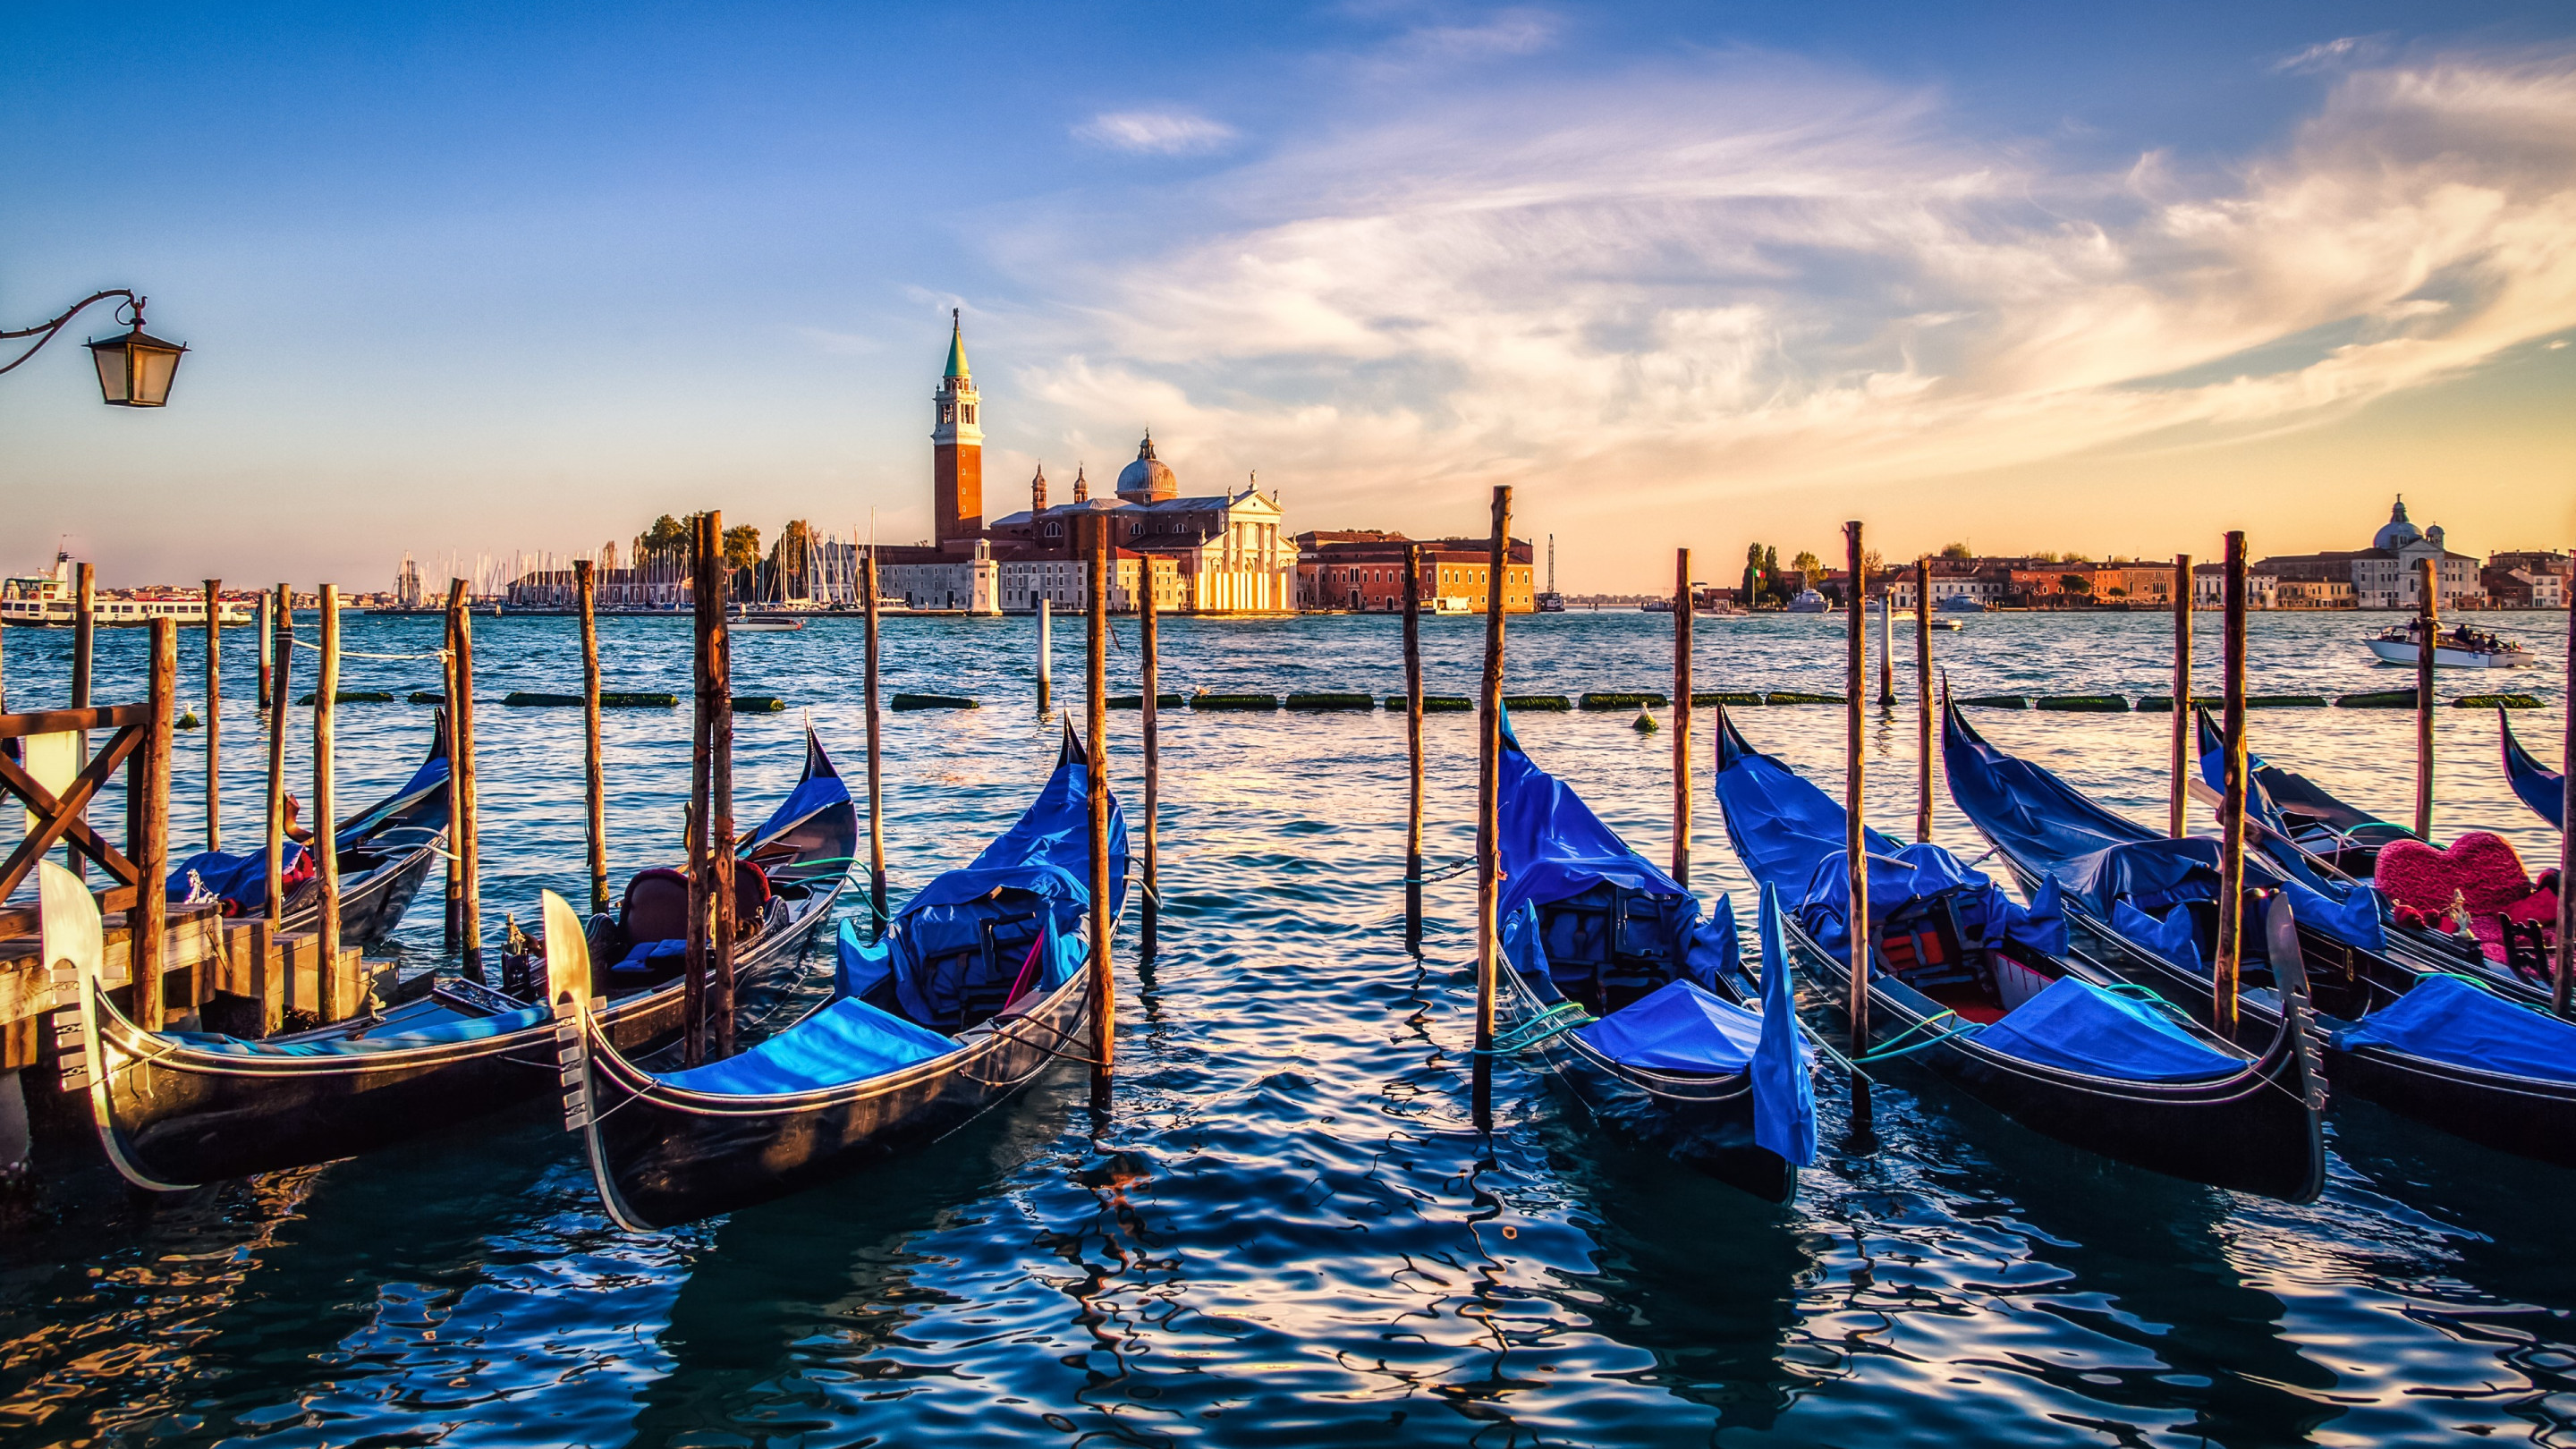 Gondolas from Venice at sunset wallpaper 2880x1620